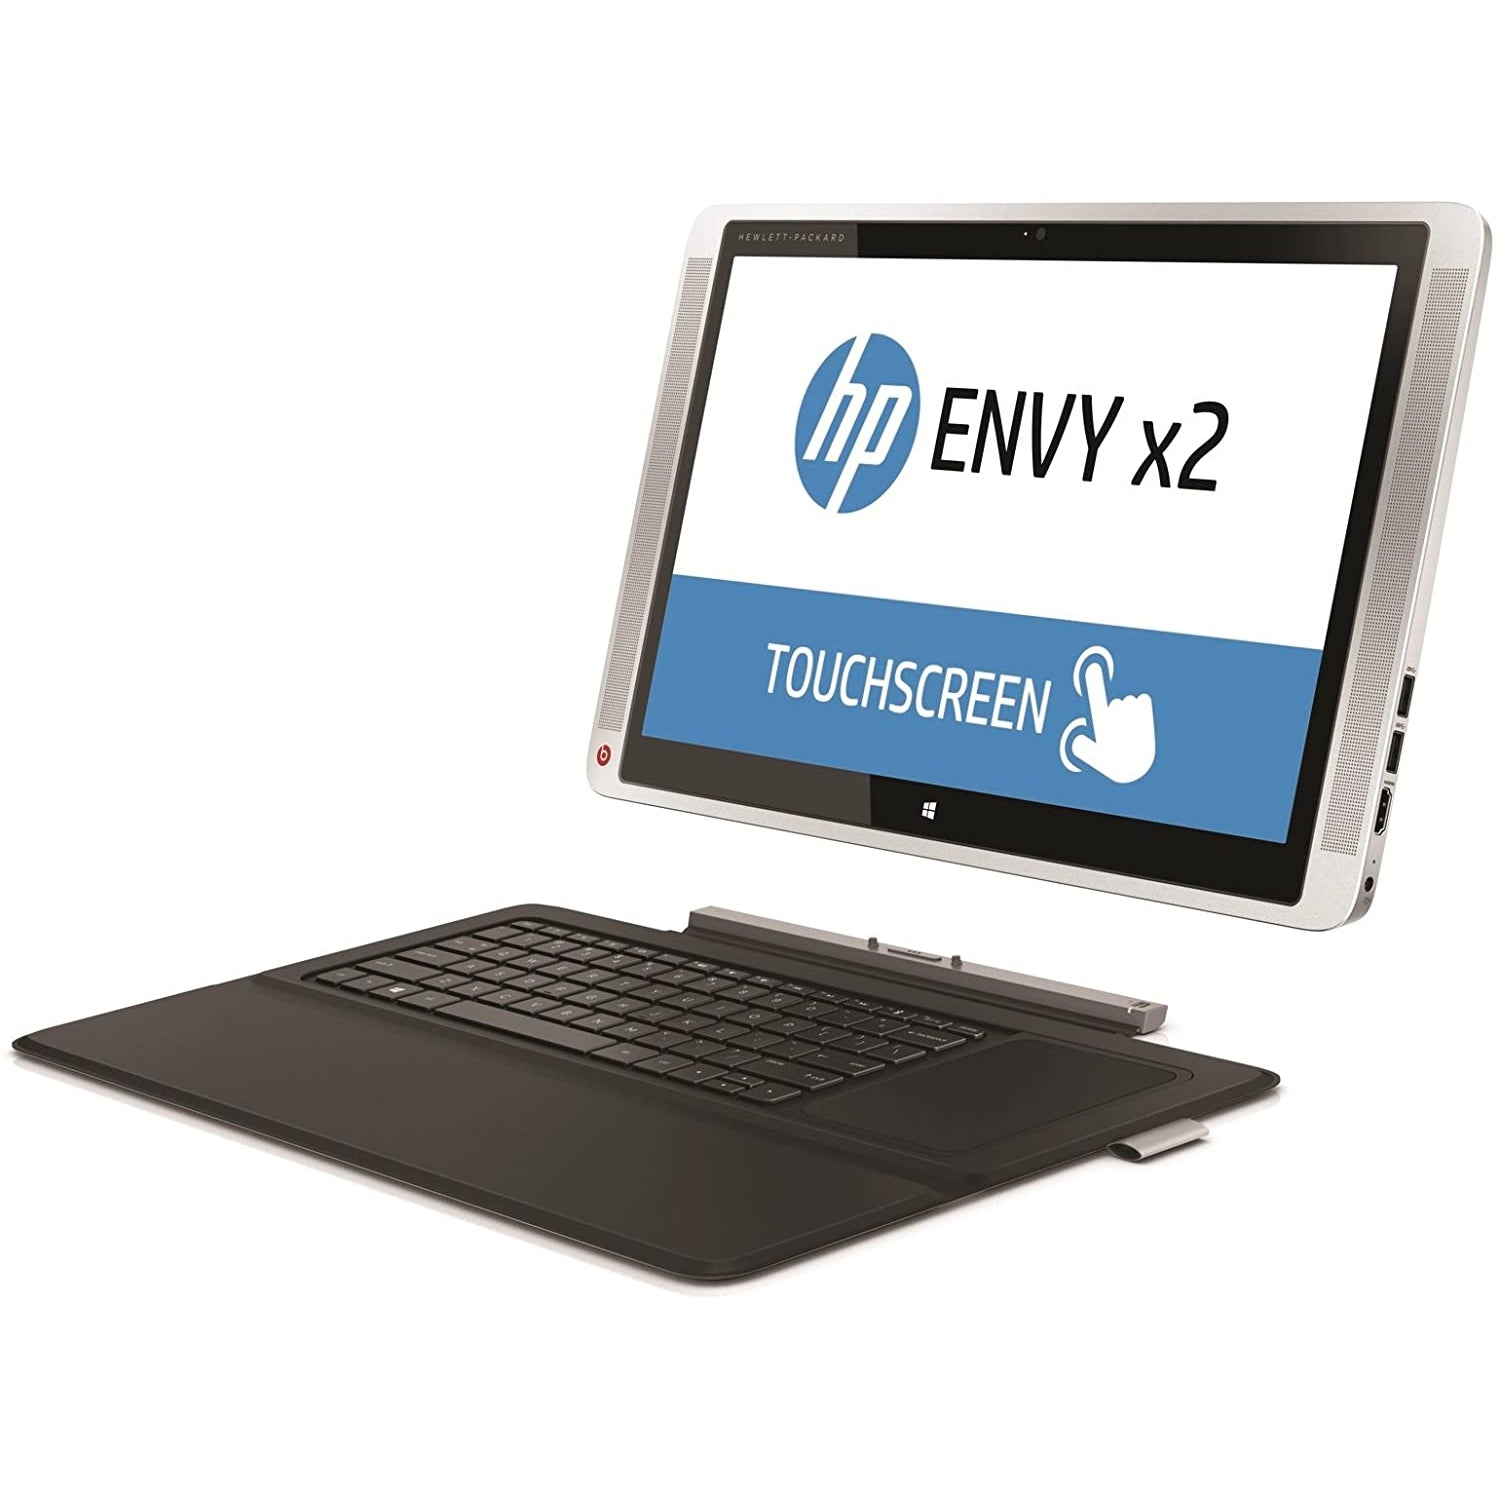 HP ENVY x2 15 Detachable PC (Intel Core M 5Y10 with Intel HD Graphics 5300, 4 GB RAM, 500GB HDD, Windows 10 - Silver